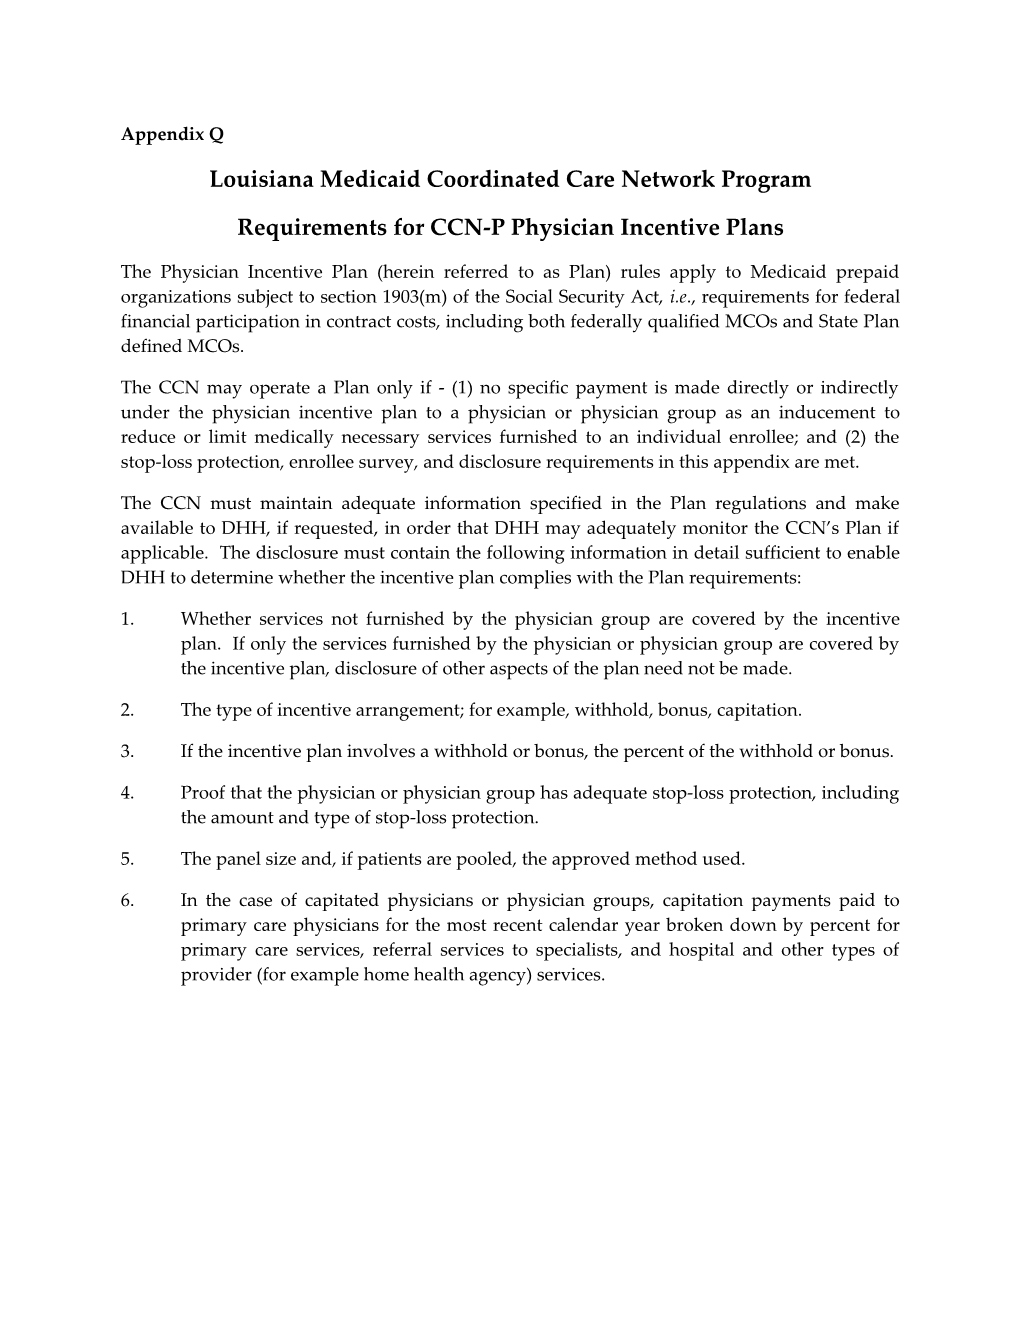 Louisiana Medicaid Coordinated Care Network Program